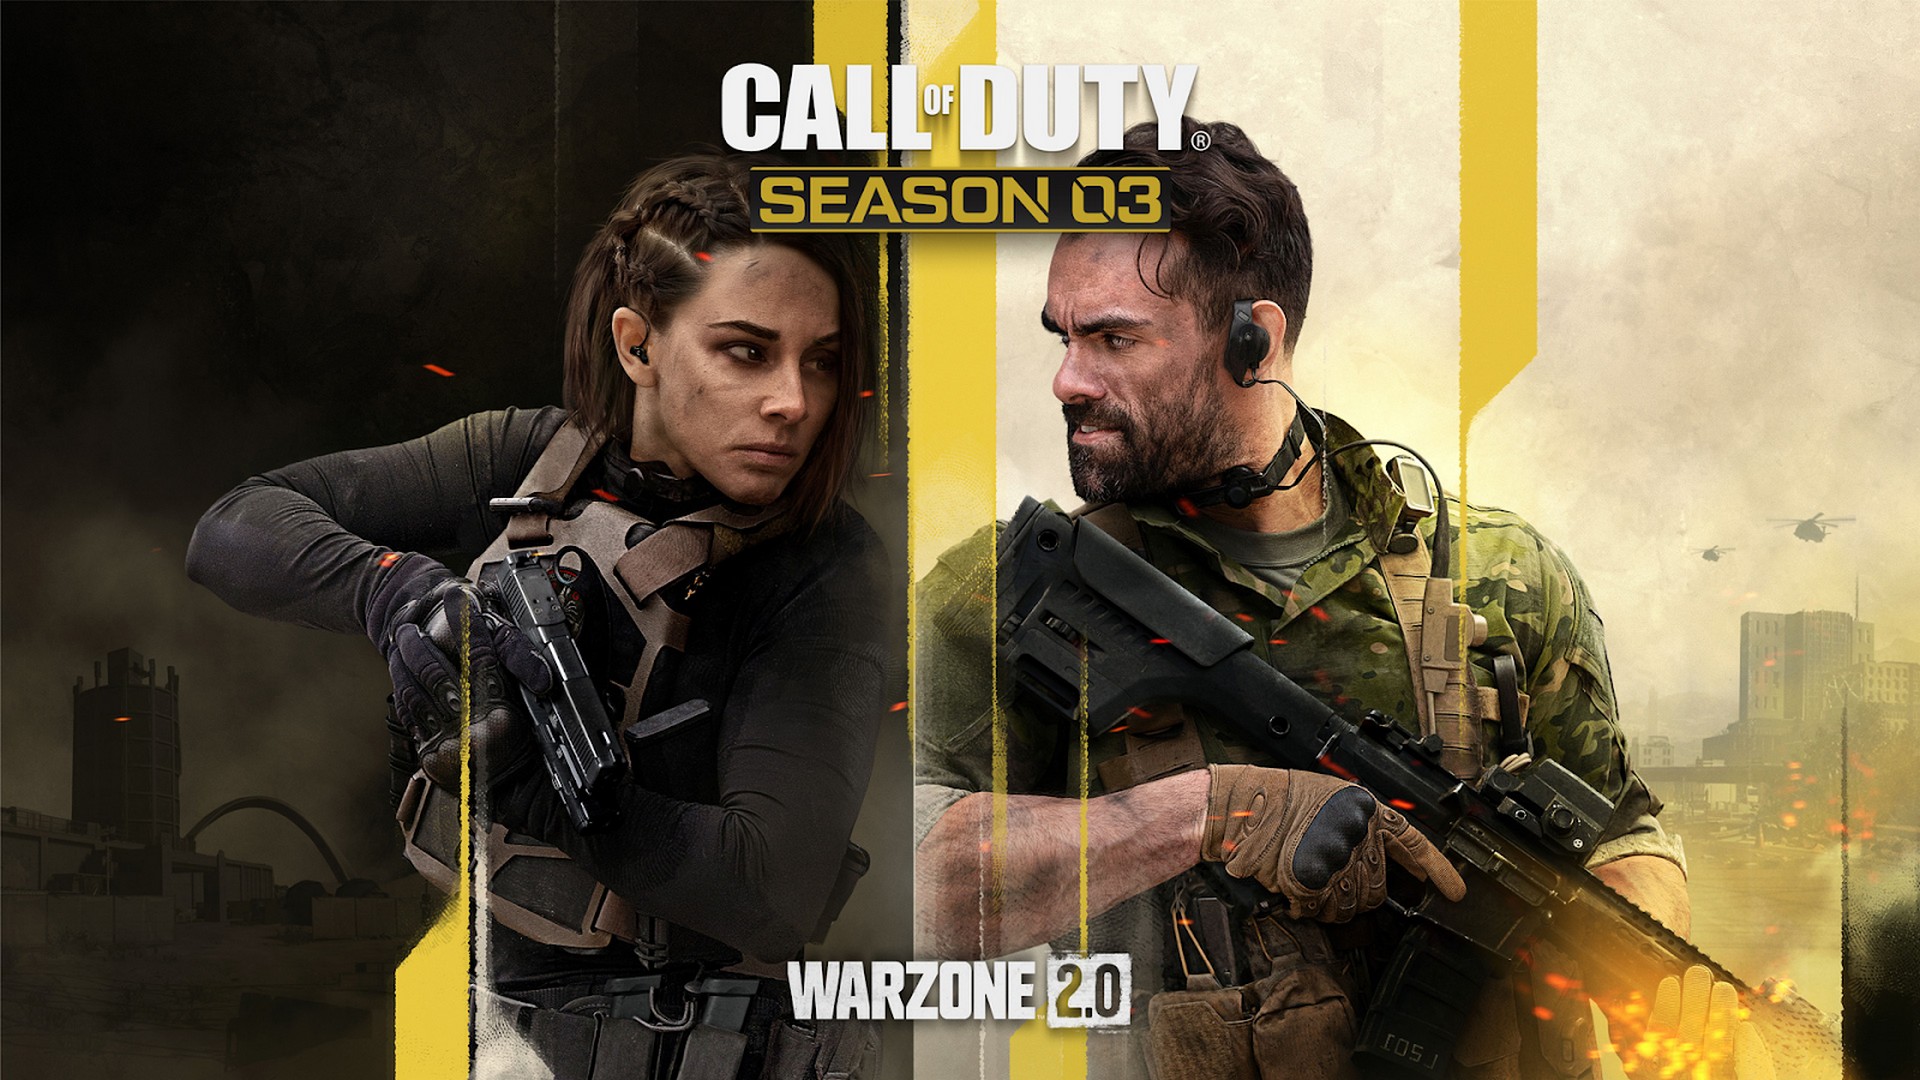 It's Anybody's Game in Season 03 of Call of Duty®: Modern Warfare